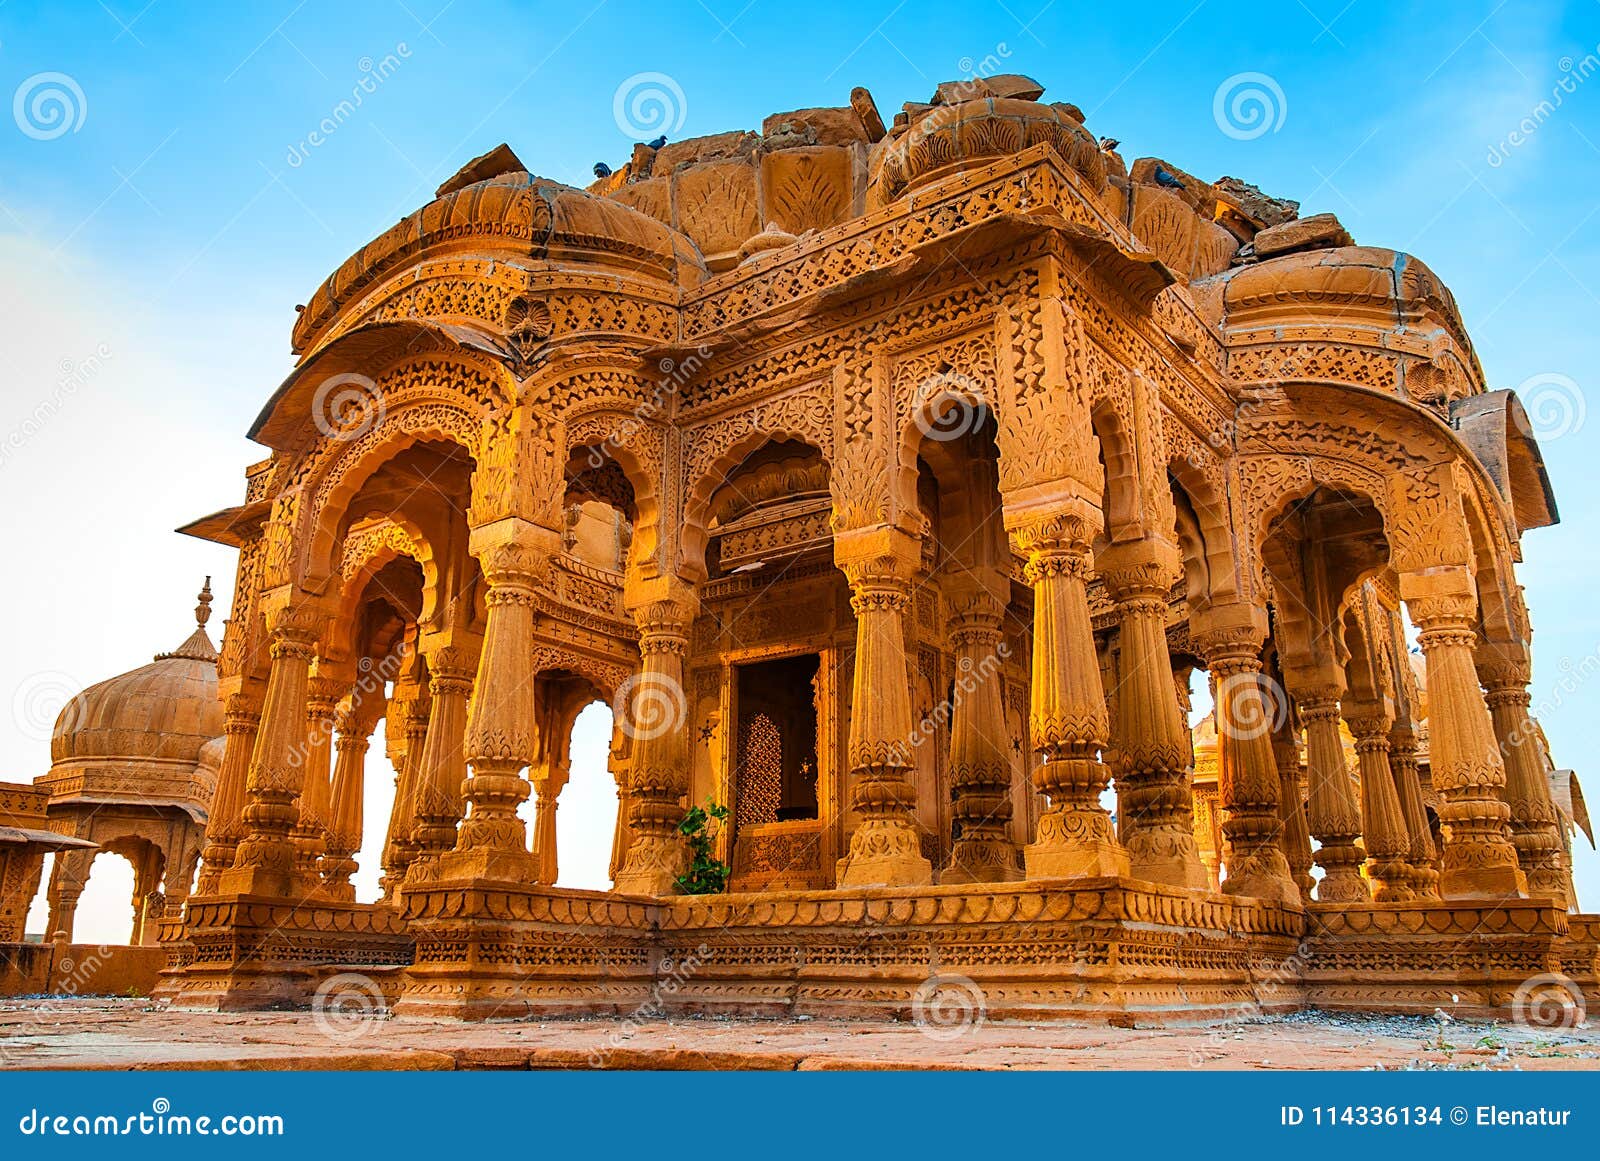 bada bagh in jaisalmer, rajasthan, india. cenotaphs made of yellow sandstone at sunset